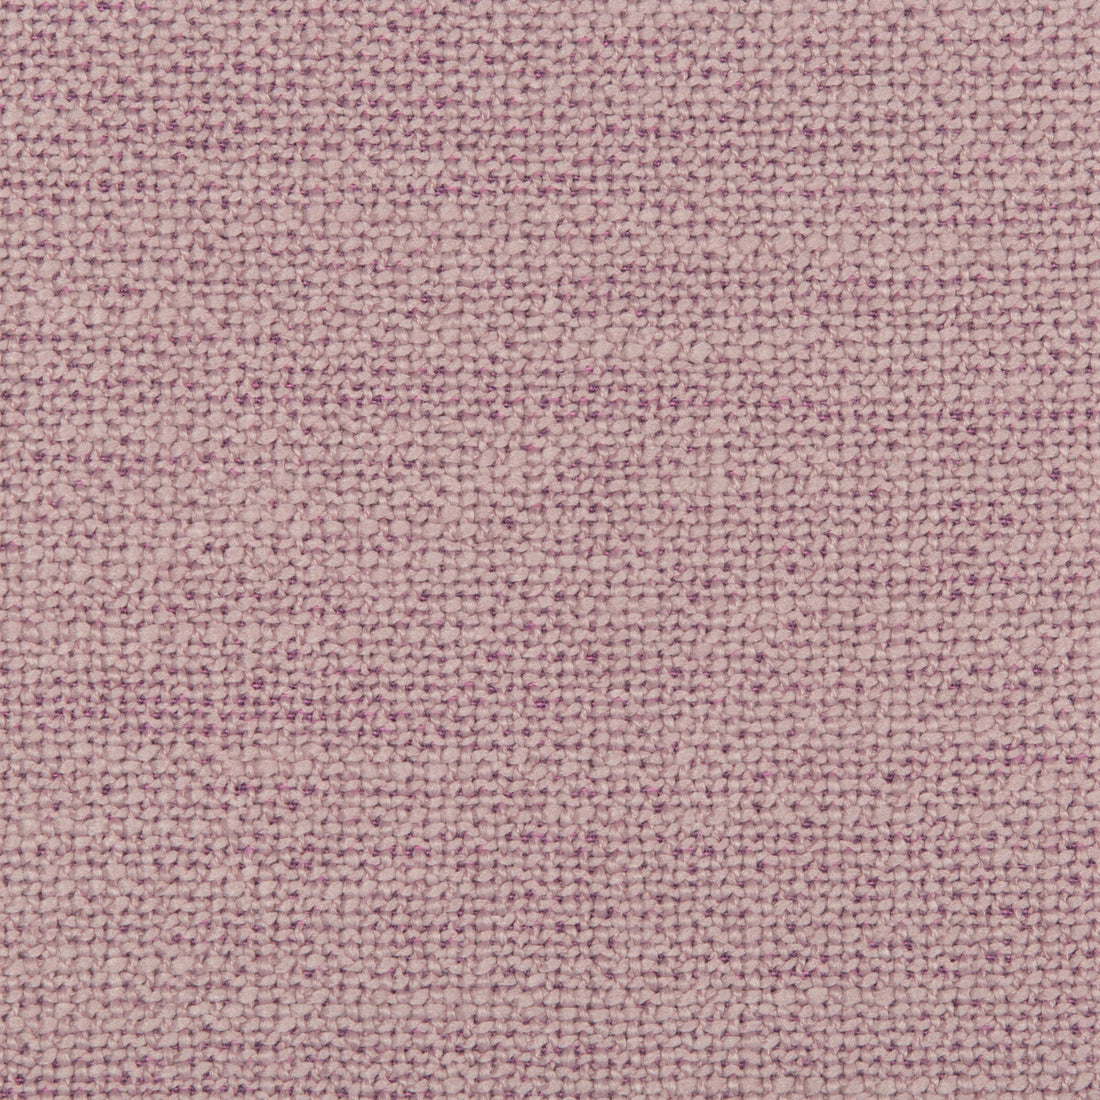 Kravet Smart fabric in 35379-10 color - pattern 35379.10.0 - by Kravet Smart in the Performance Kravetarmor collection